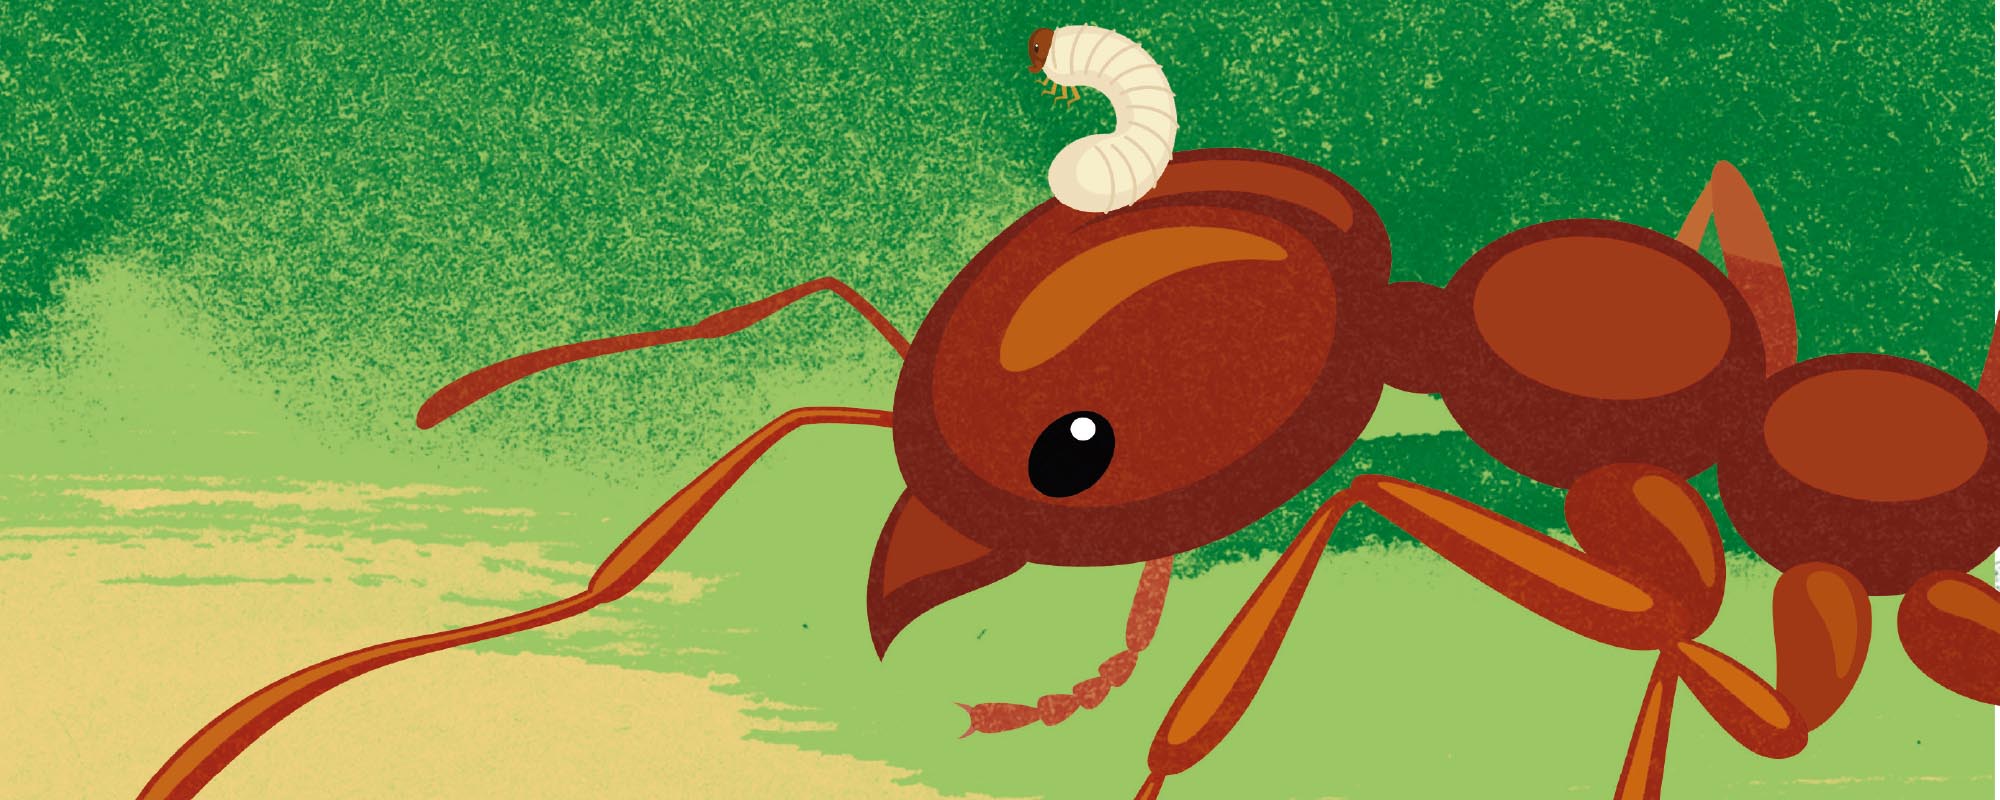 Ant parasite